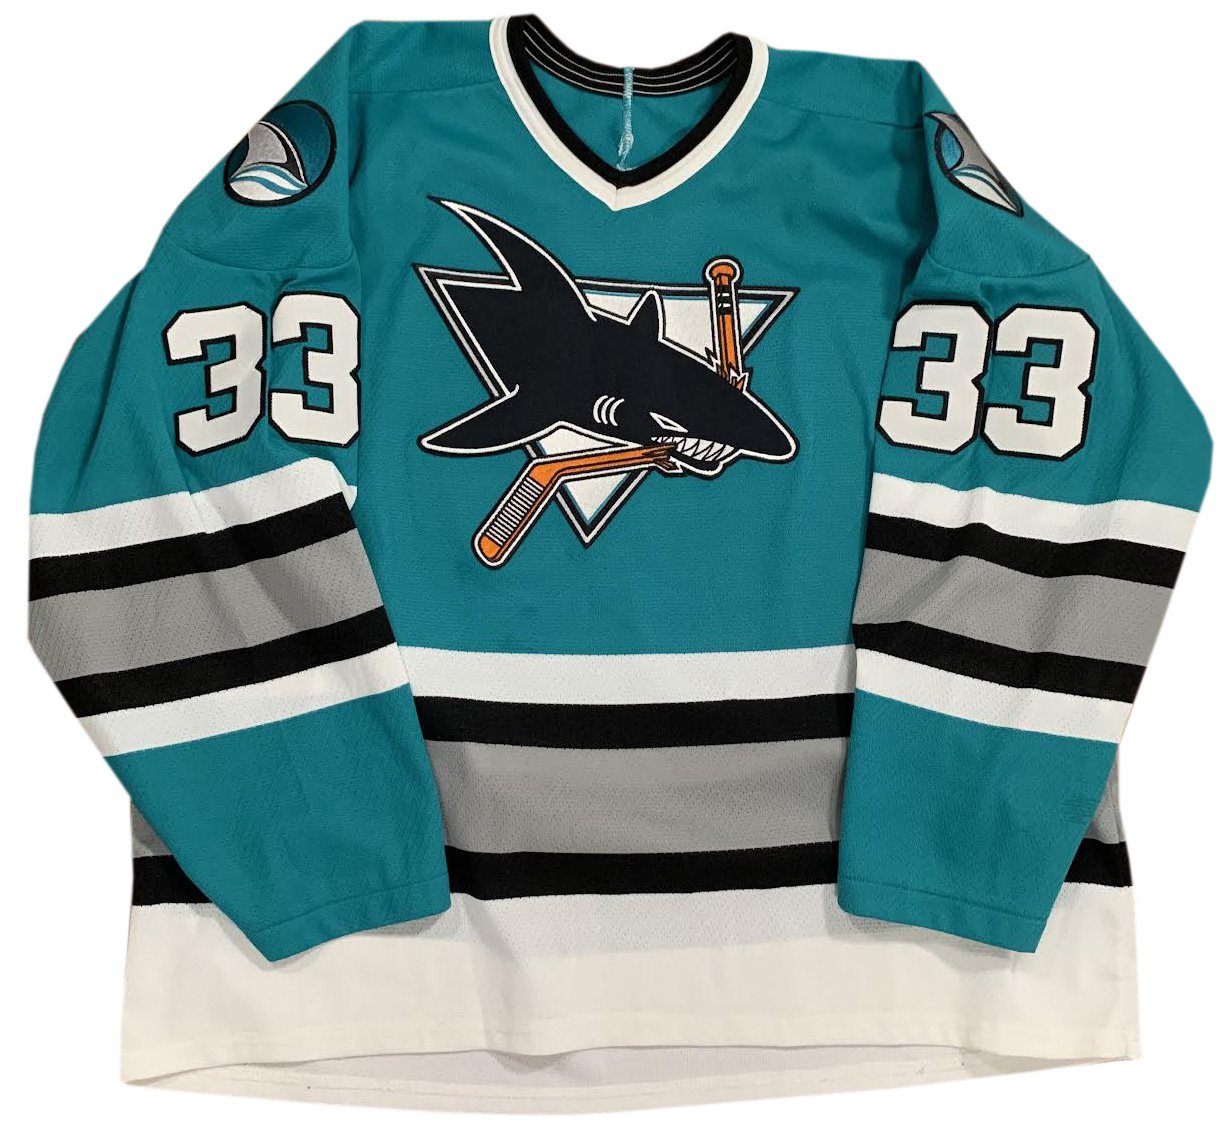 CCM  MARTY MCSORLEY Pittsburgh Penguins 1983 Vintage Hockey Jersey